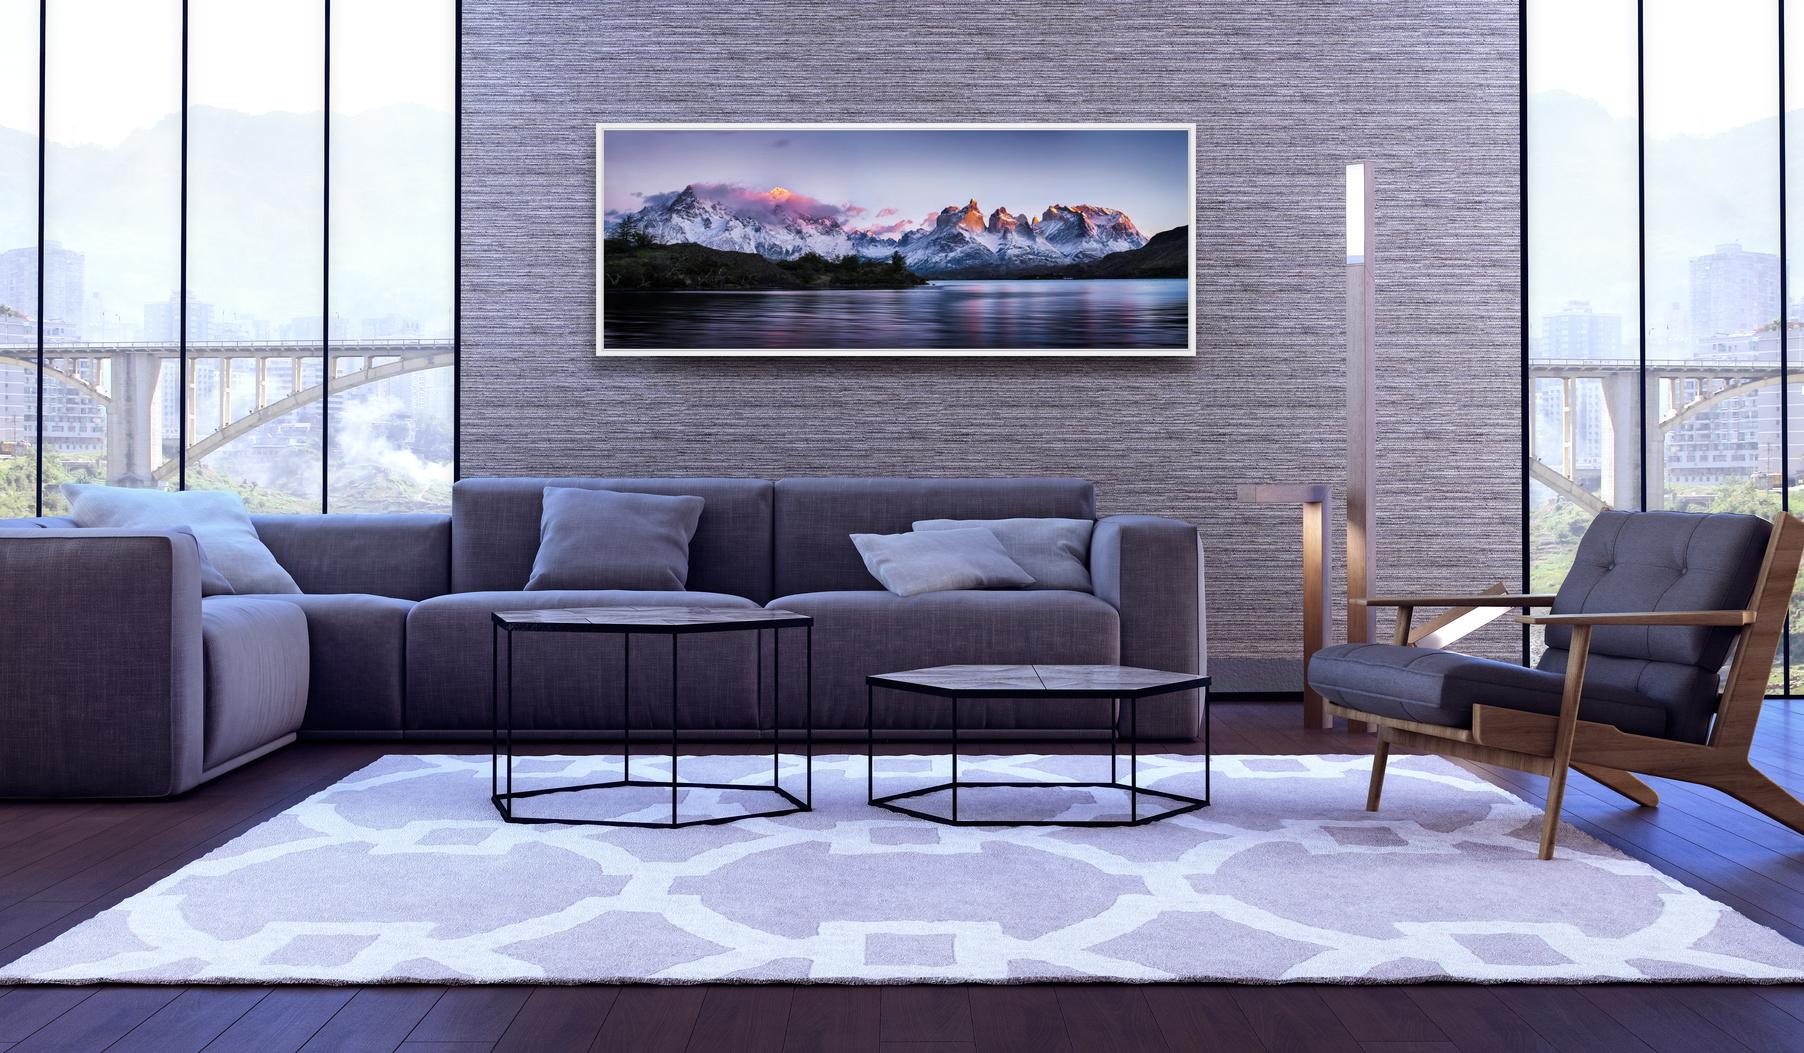 Panorama-Landschaft von Ignacio Palacios im Wohnzimmer #wanddeko ©Bild: Ignacio Palacios. Raum: hd3dsh - Fotolia